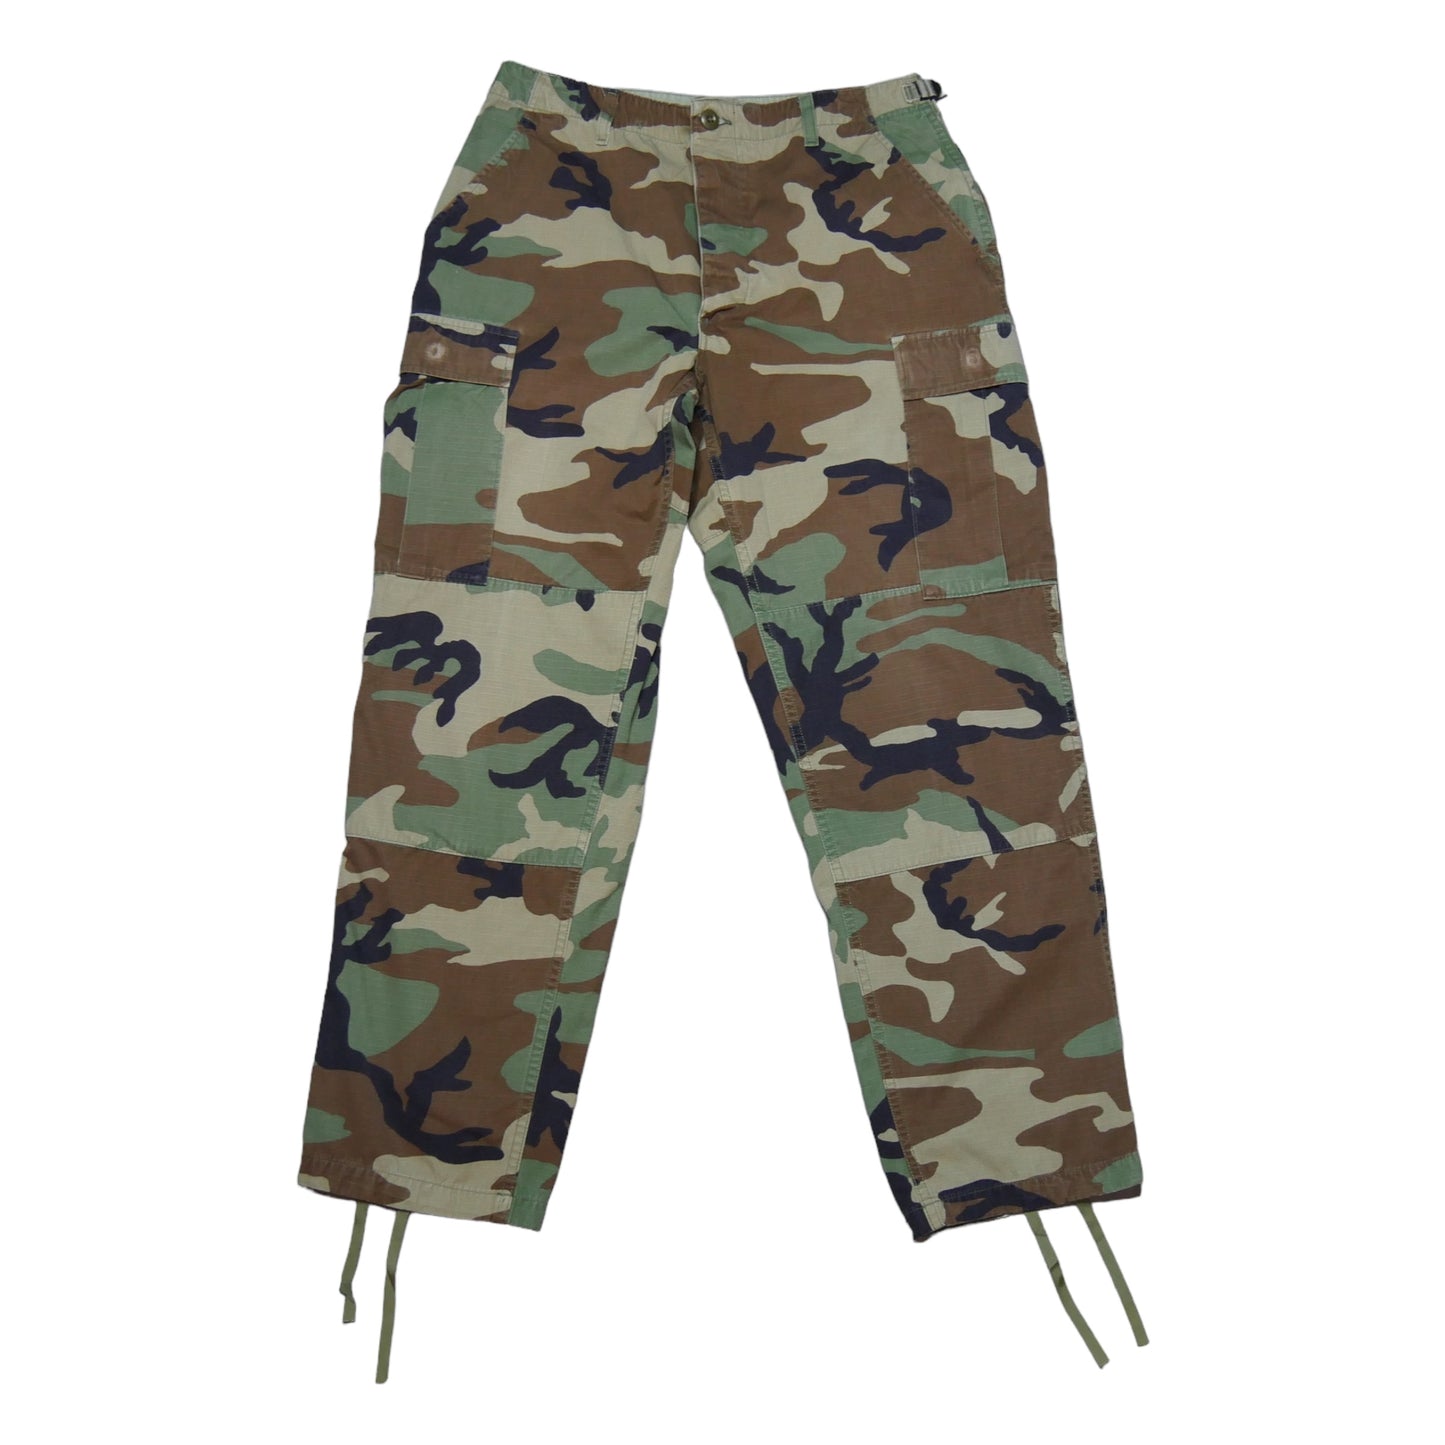 Army Camo BDU Cargo Pants - Medium/Reg